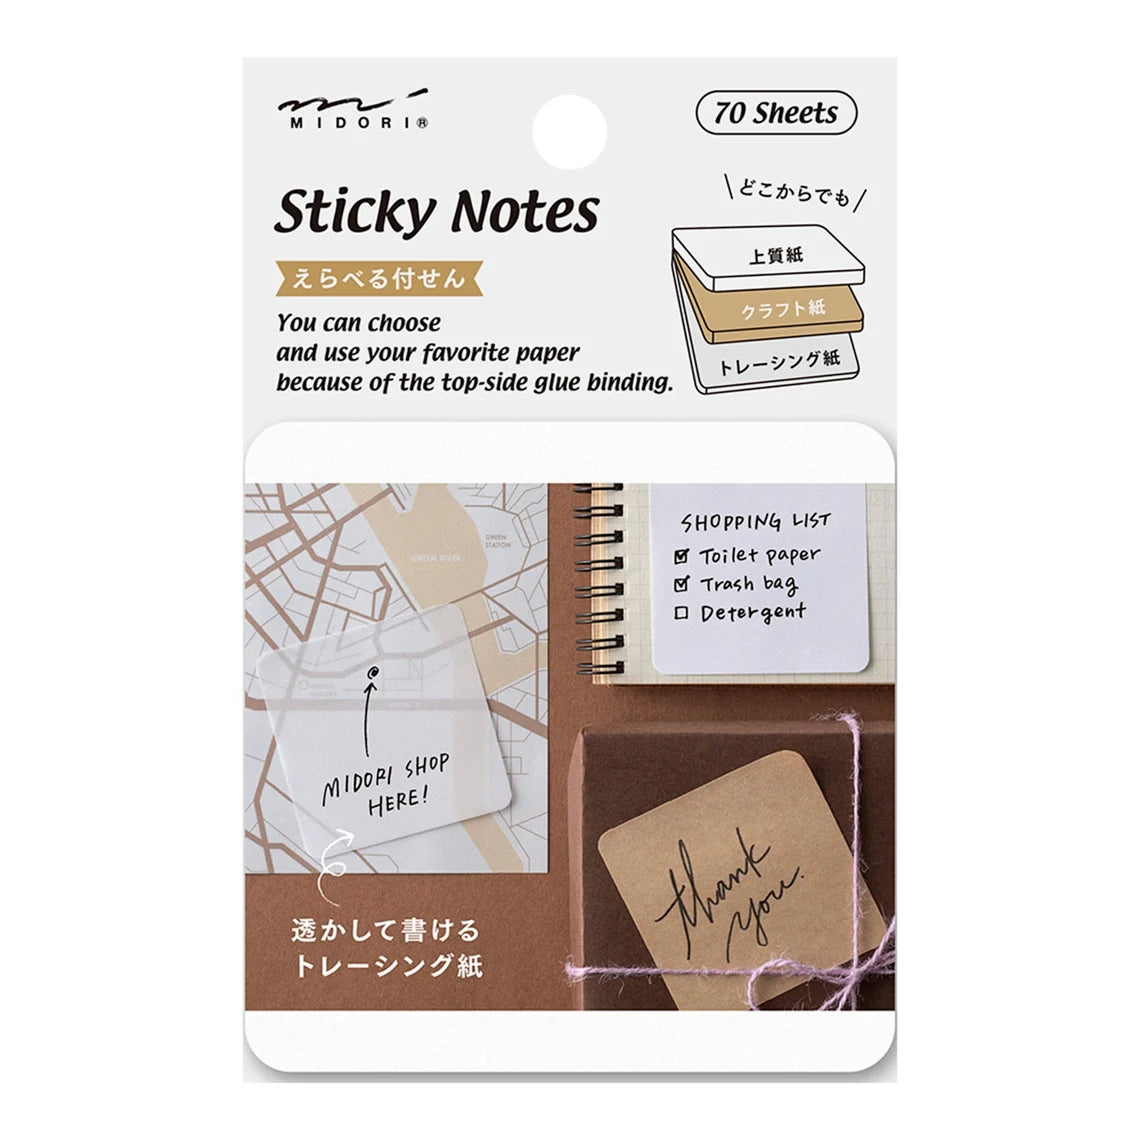 Midori - Sticky Notes